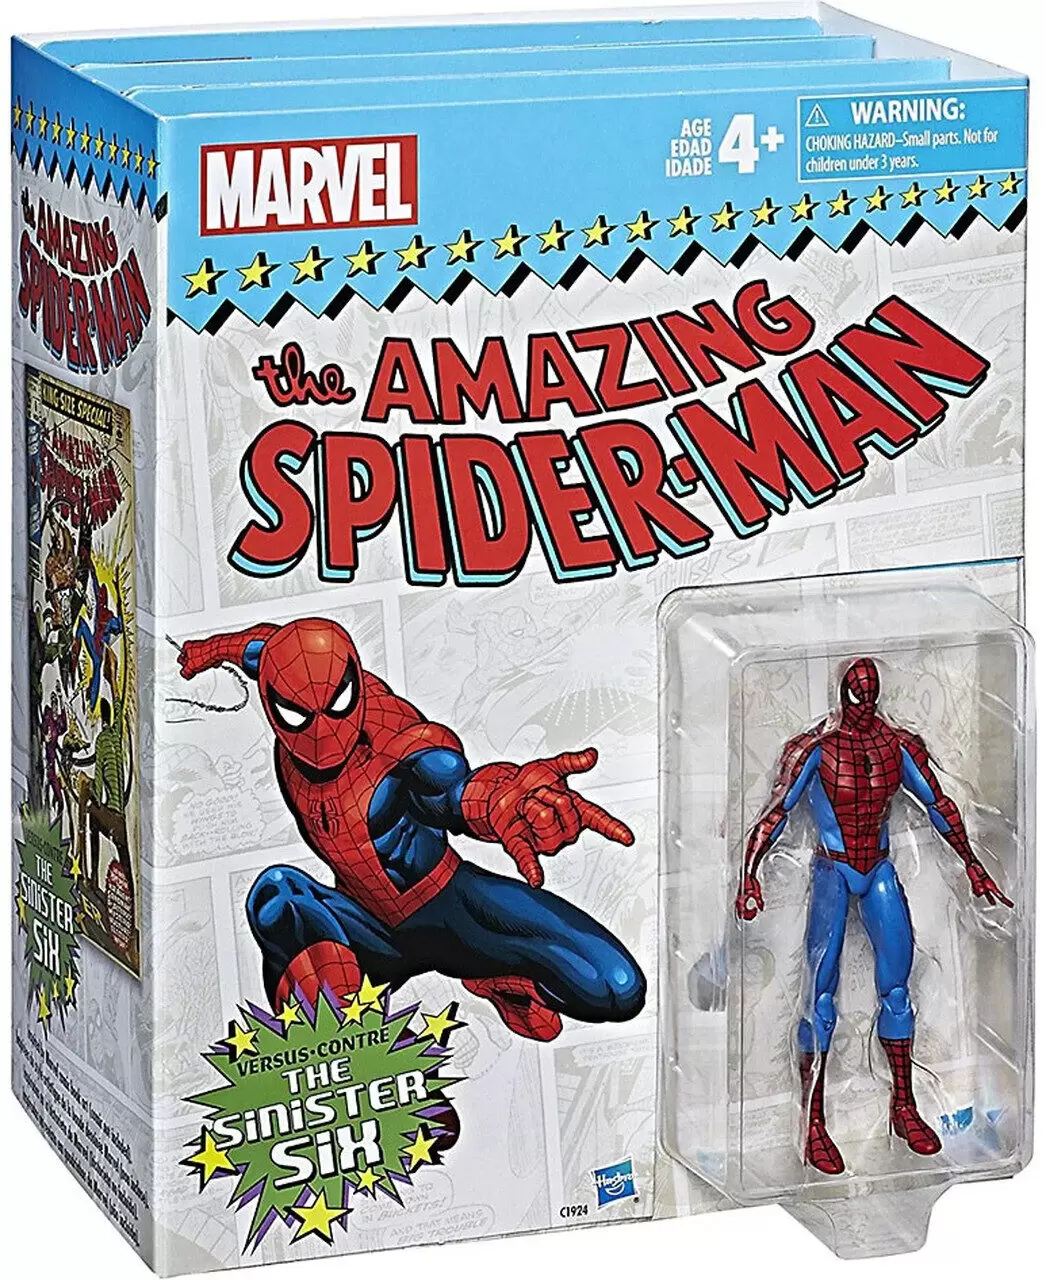 Spider-Man Marvel Legends Retro Series Classic Spiderman Action Figure  6-inch